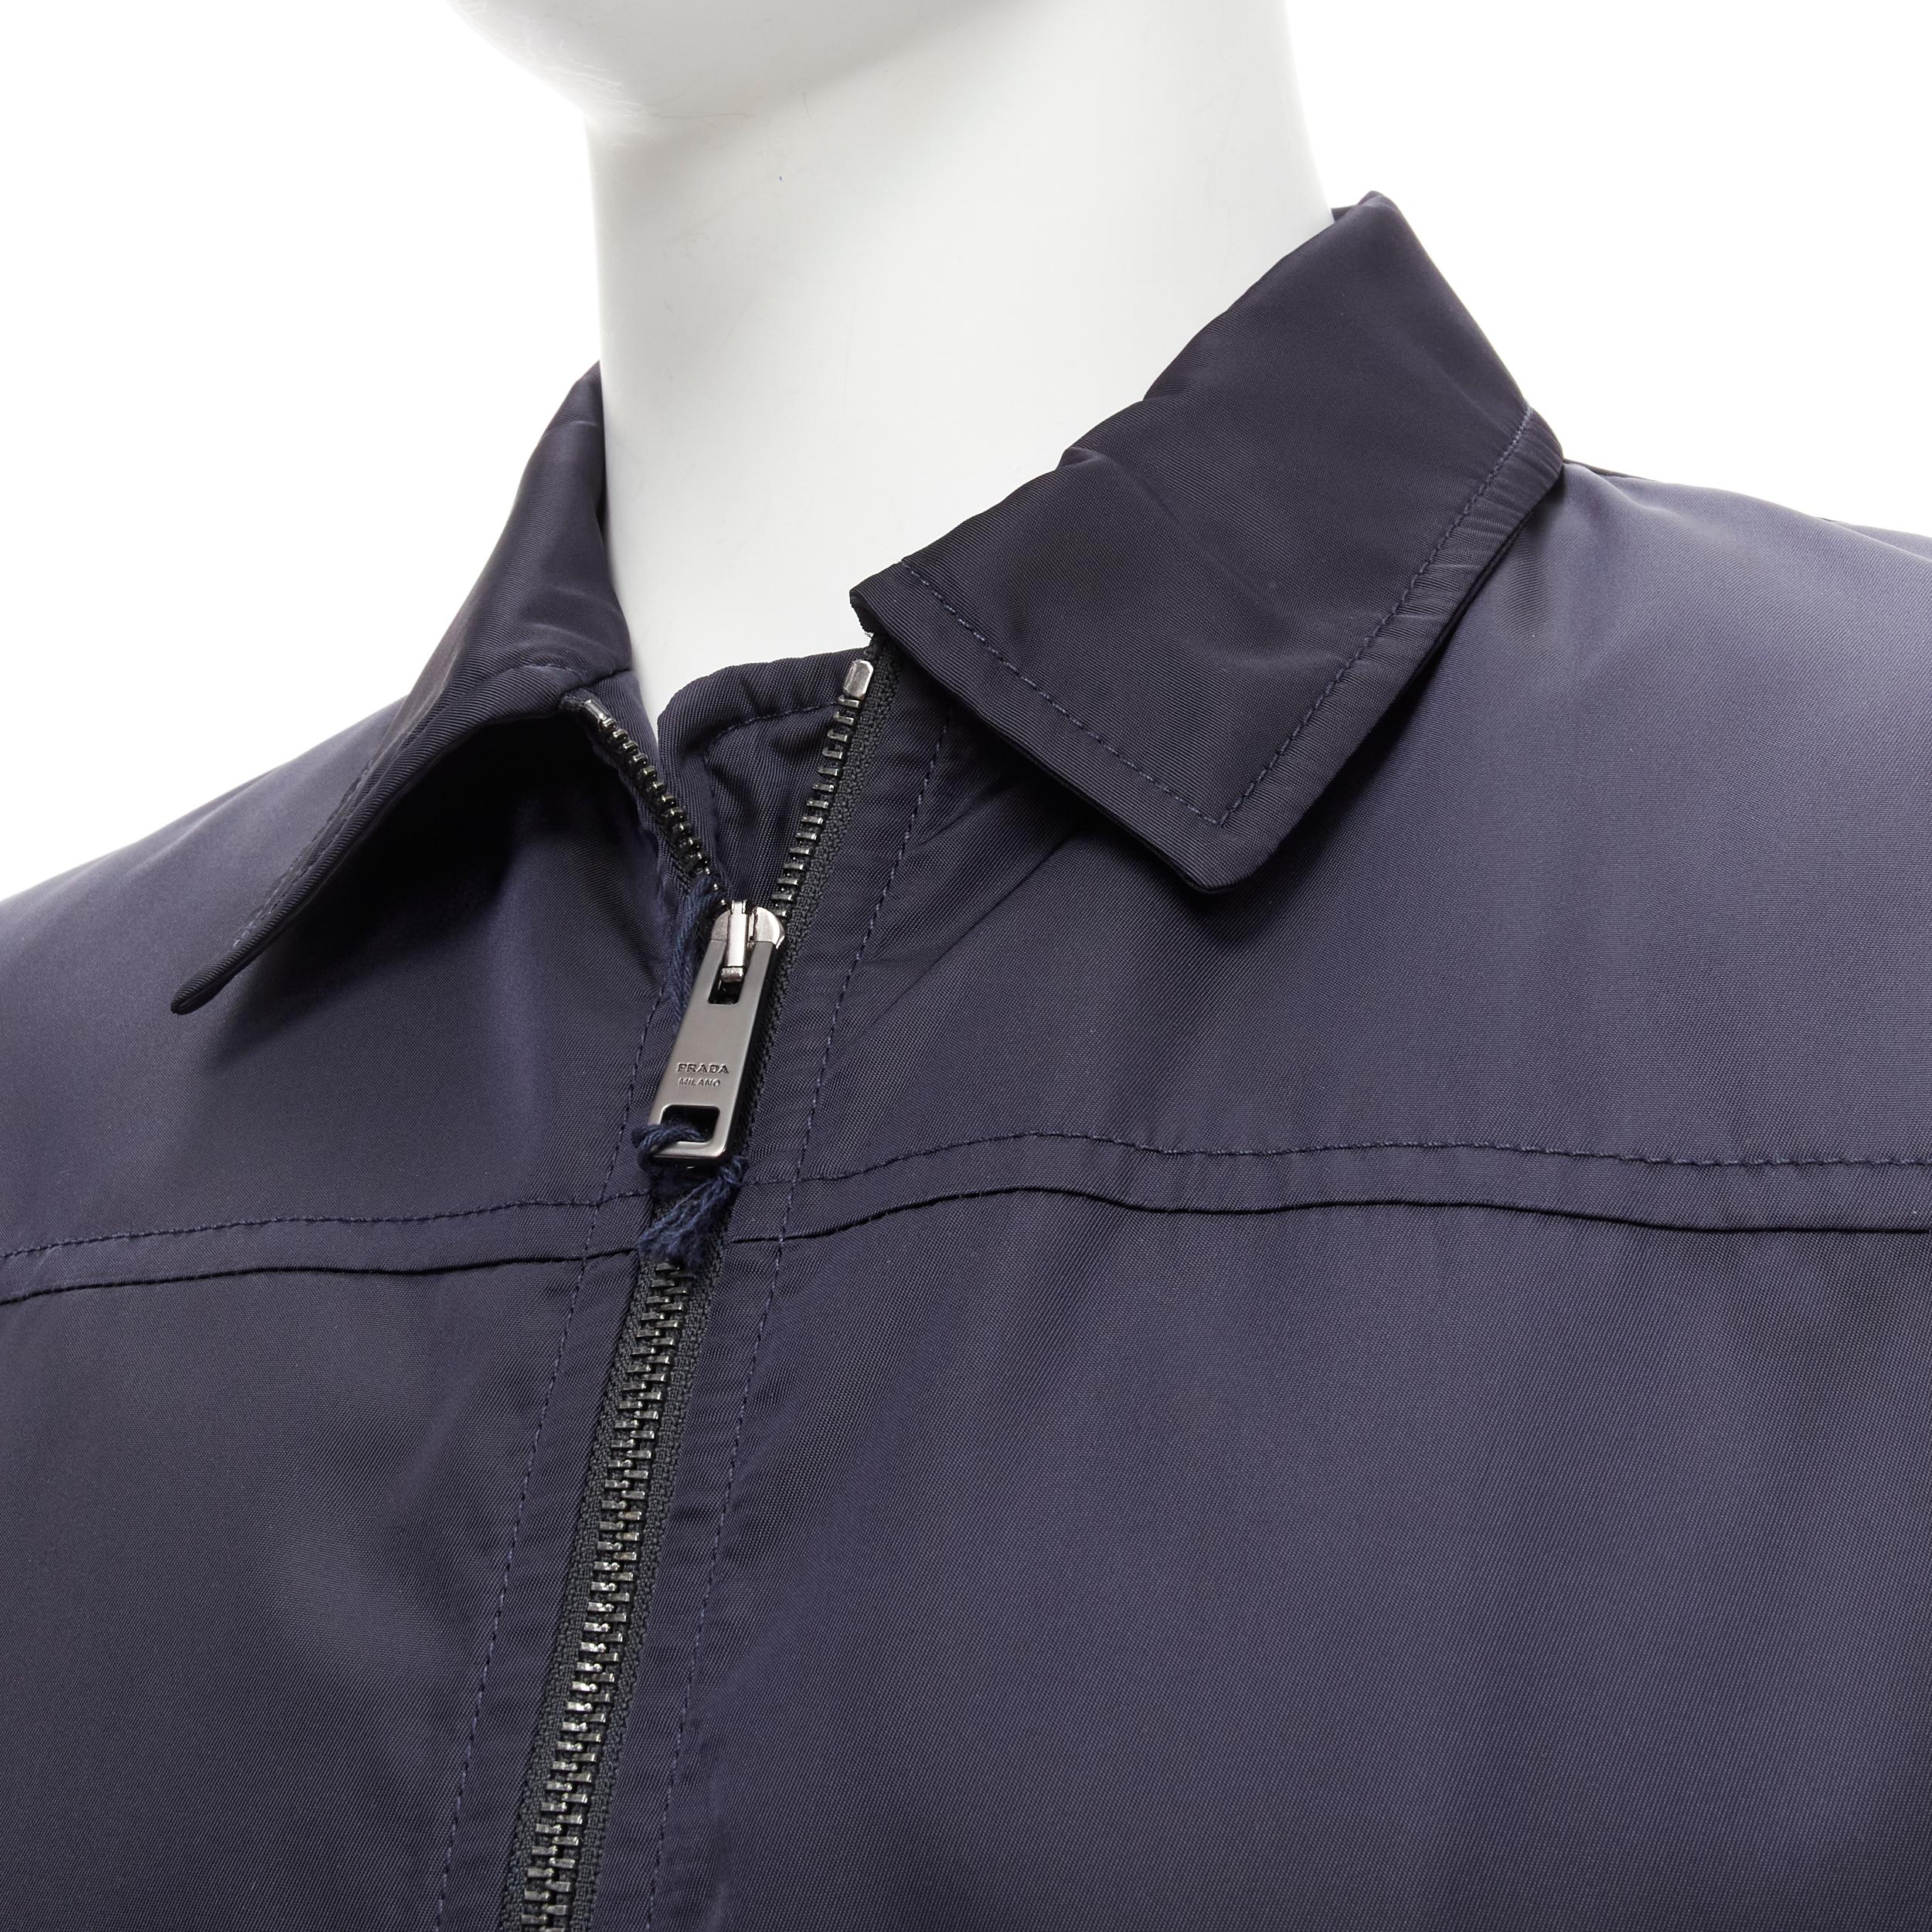 new PRADA 2019 navy blue nylon zip front dual pocket minimal jacket IT46 S
Reference: TGAS/D00155
Brand: Prada
Designer: Miuccia Prada
Collection: 2019
Material: Nylon
Color: Navy
Pattern: Solid
Closure: Zip
Lining: Black Fabric
Extra Details: